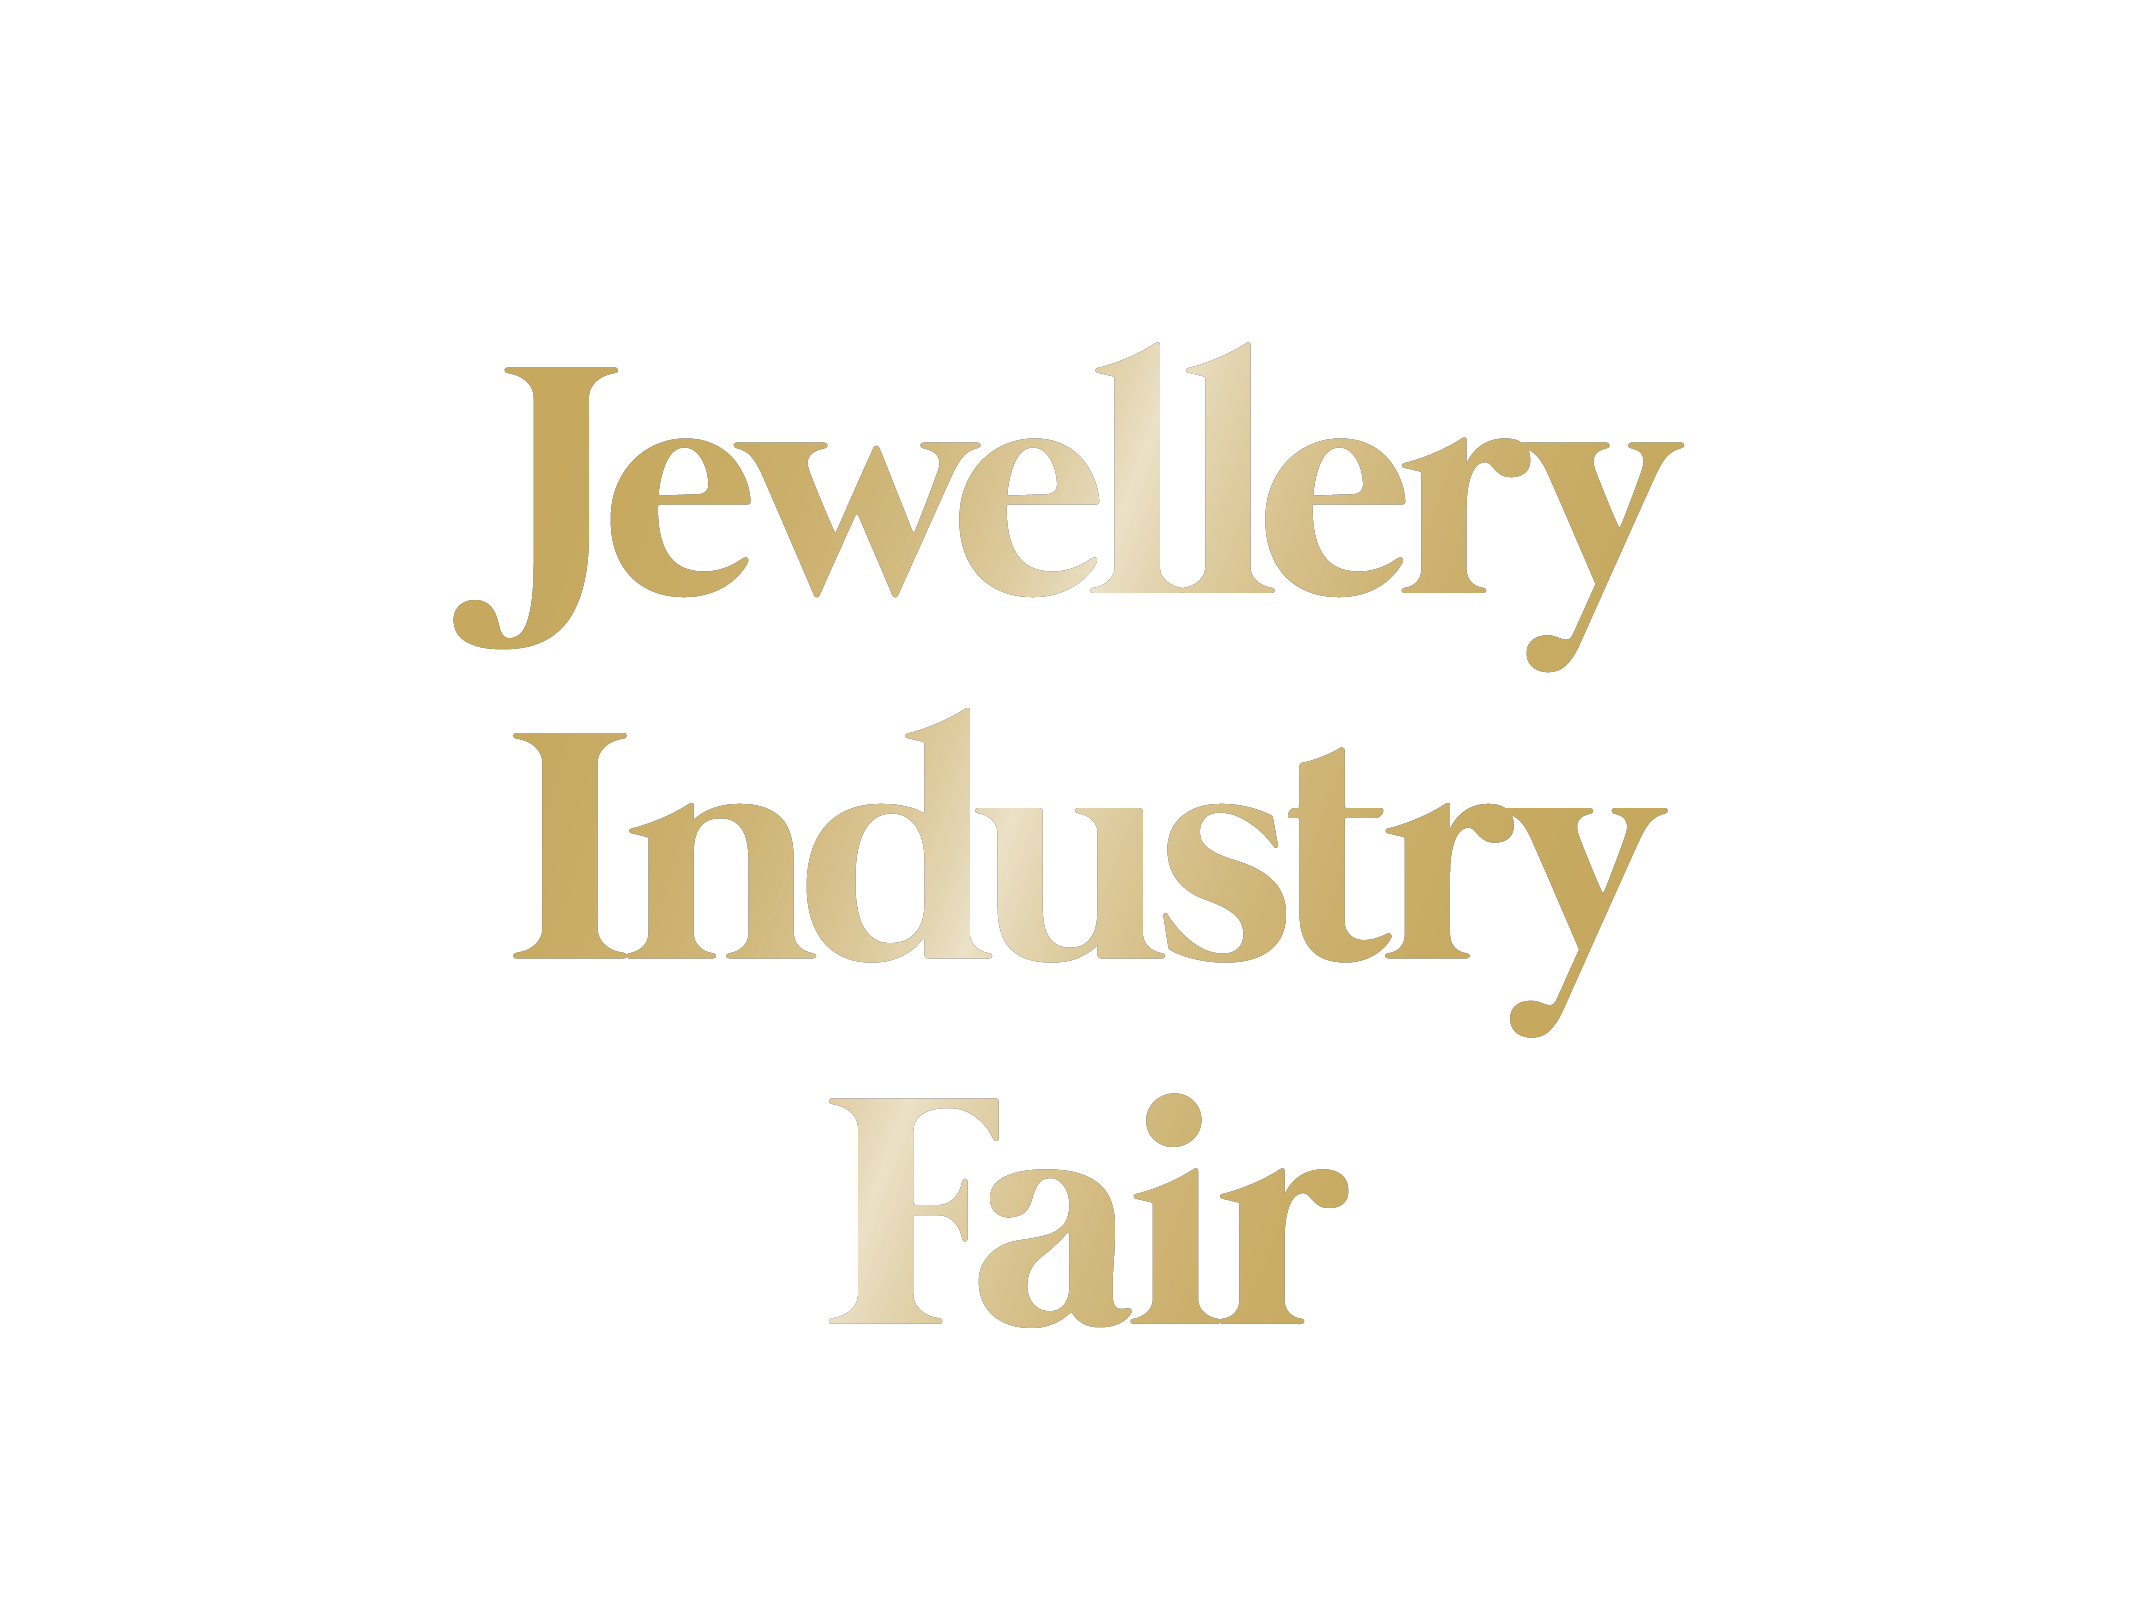 Sydney Jewellery Industry Fair